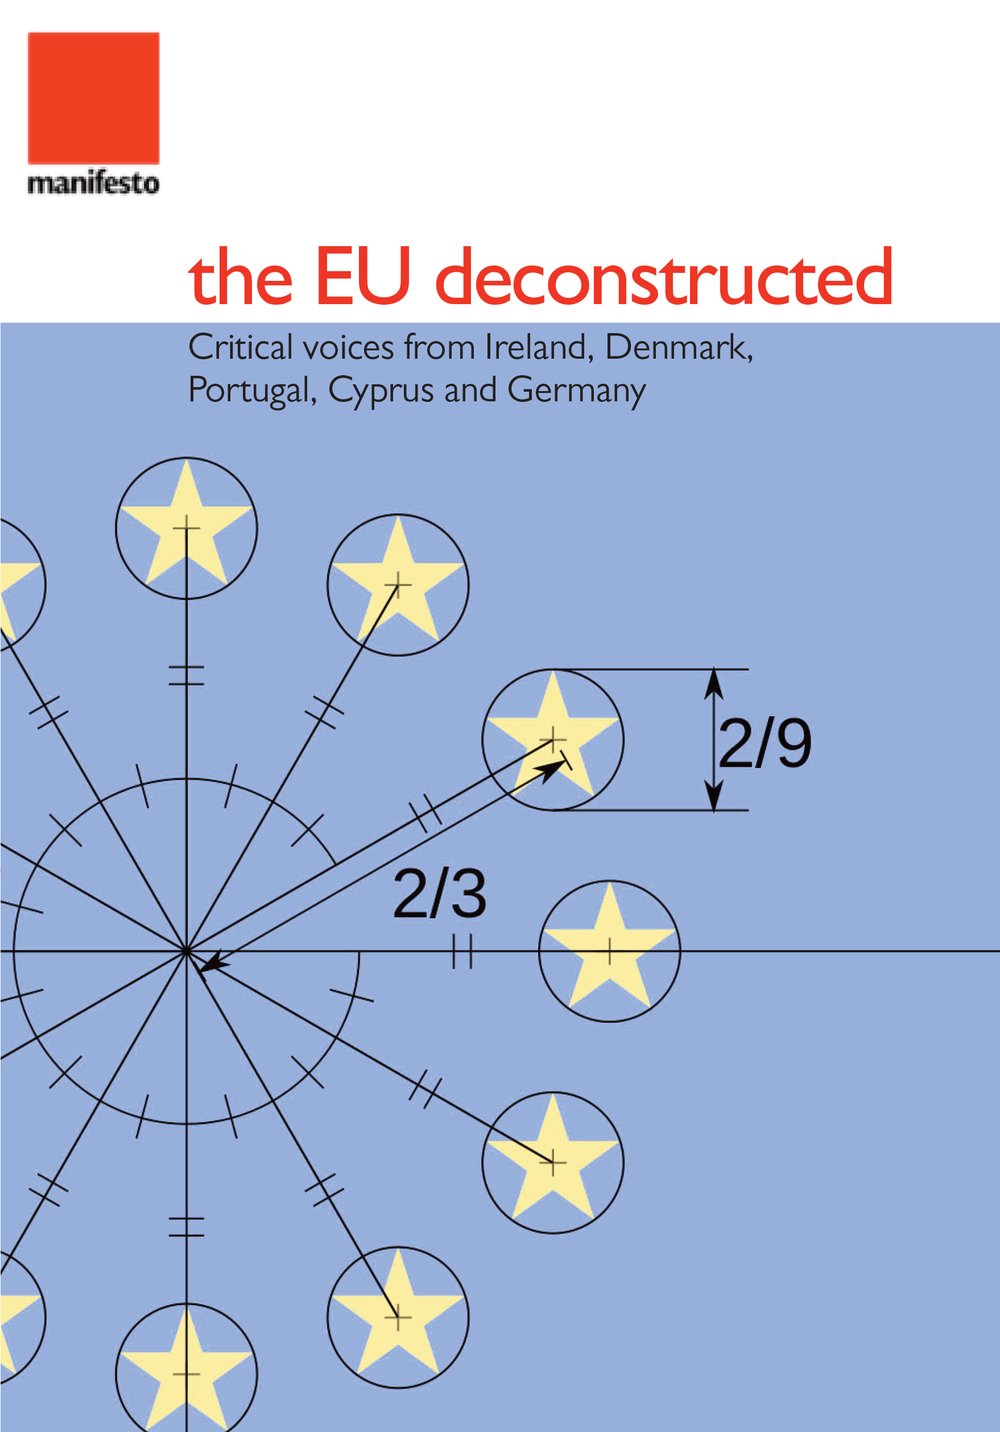 The EU deconstructed